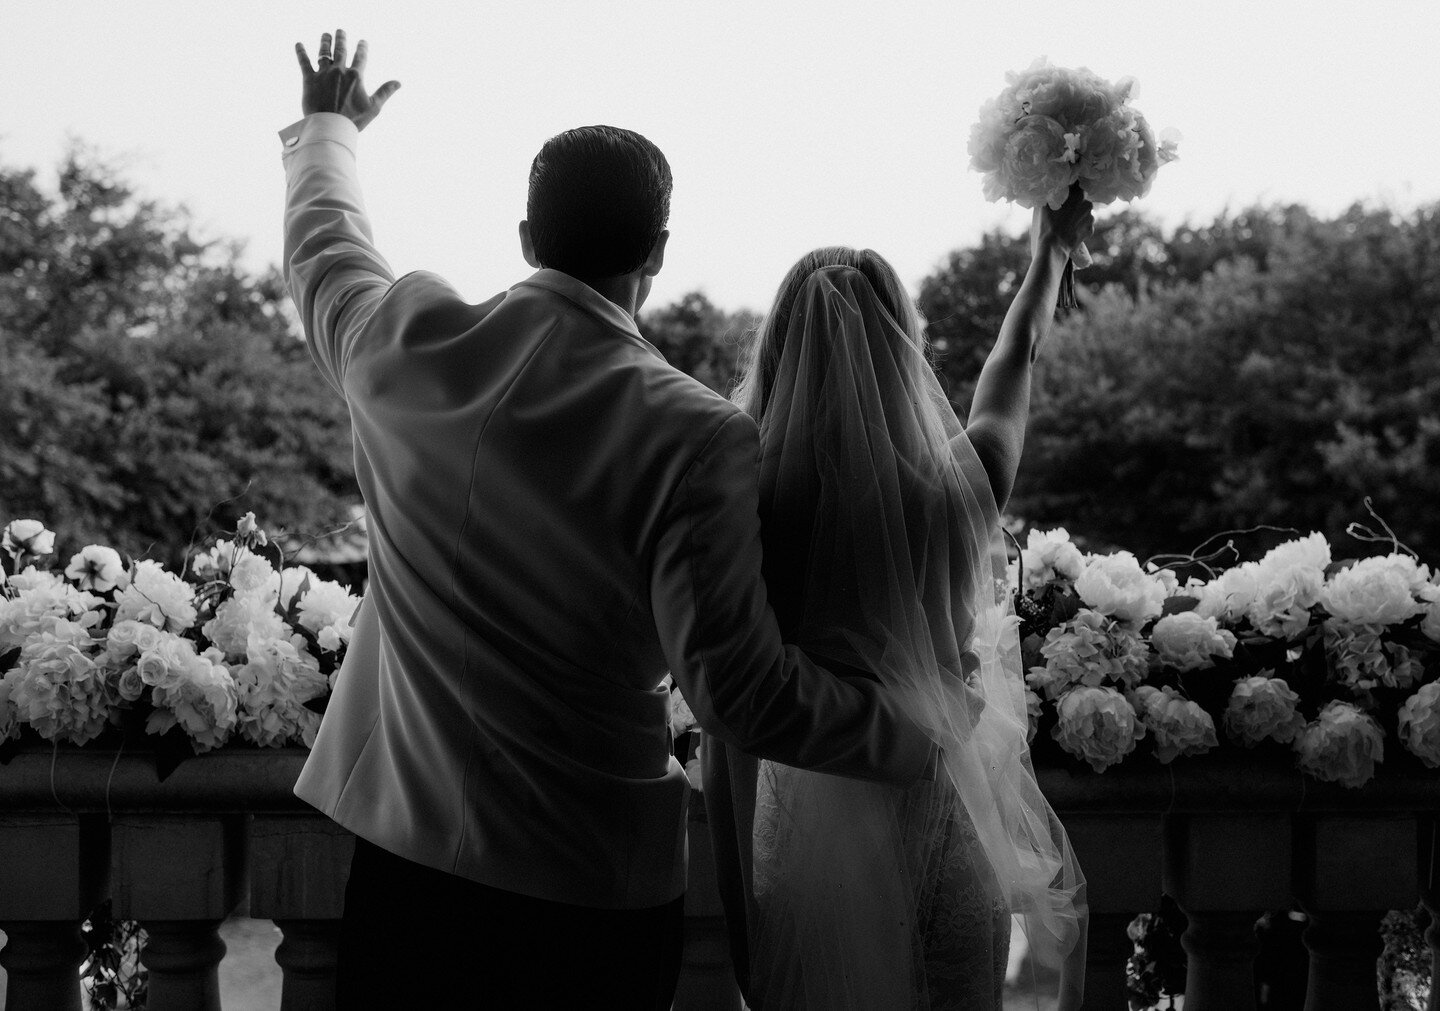 Royal wedding feels from Krystal and Luke.⁠
⁠⁠
#JosephWestPhotography⁠
⁠
Planning: @toddevents @diamondaffairs ⁠
⁠
- ⁠
⁠
#Photography #Bride #BridalDetails #BridalPhotography #FineArtPhotography #FineArtWeddingPhotography #FineArtPhotographer #Weddin